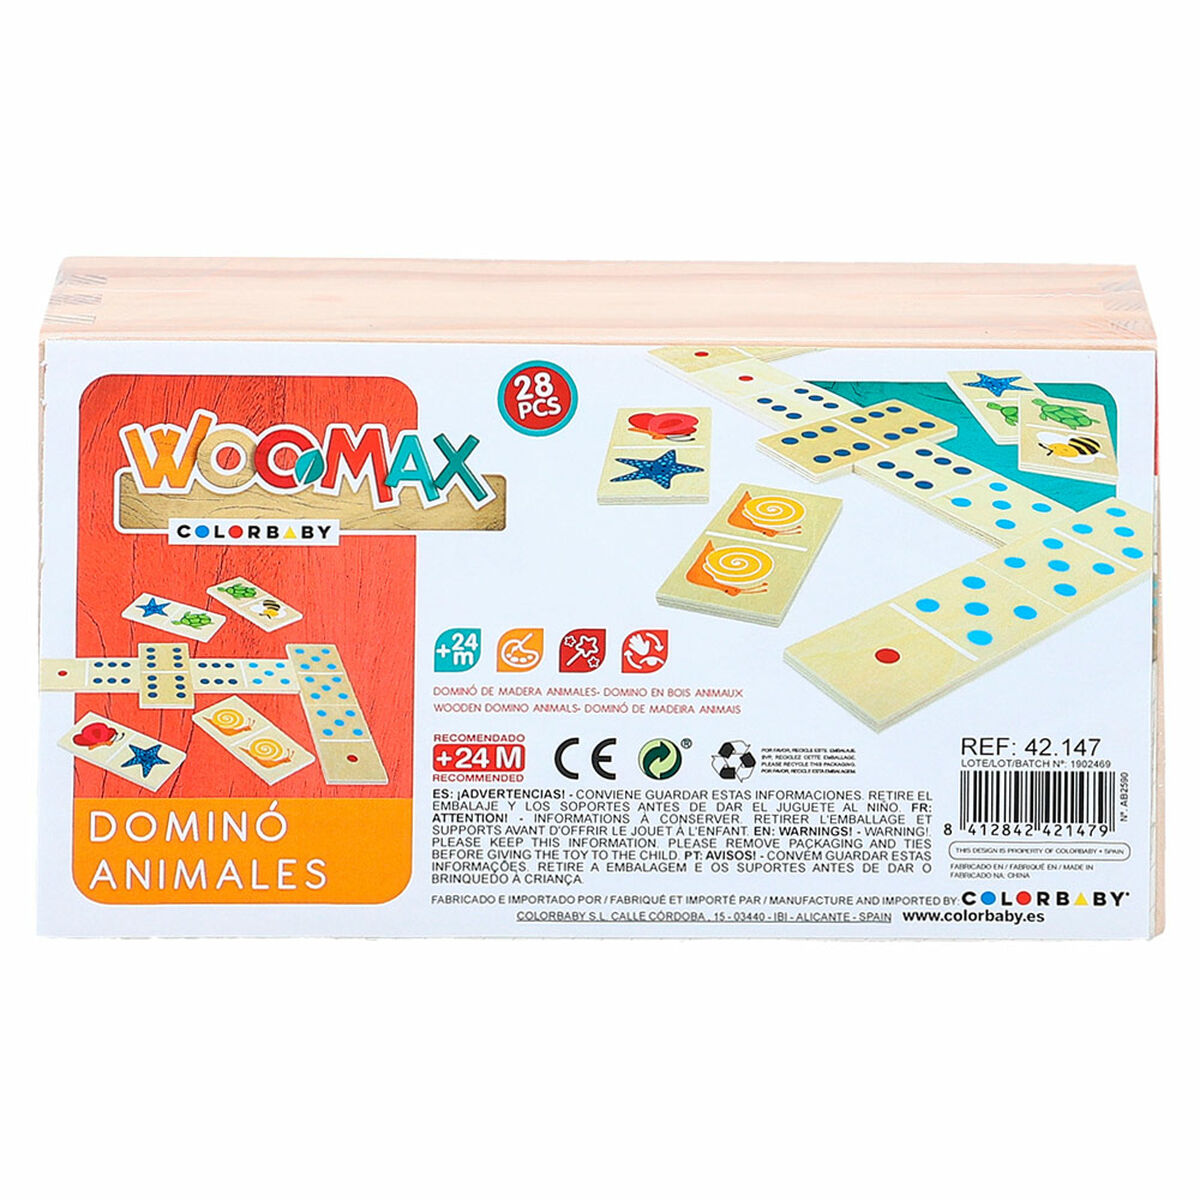 Domino Woomax animals (12 Units)